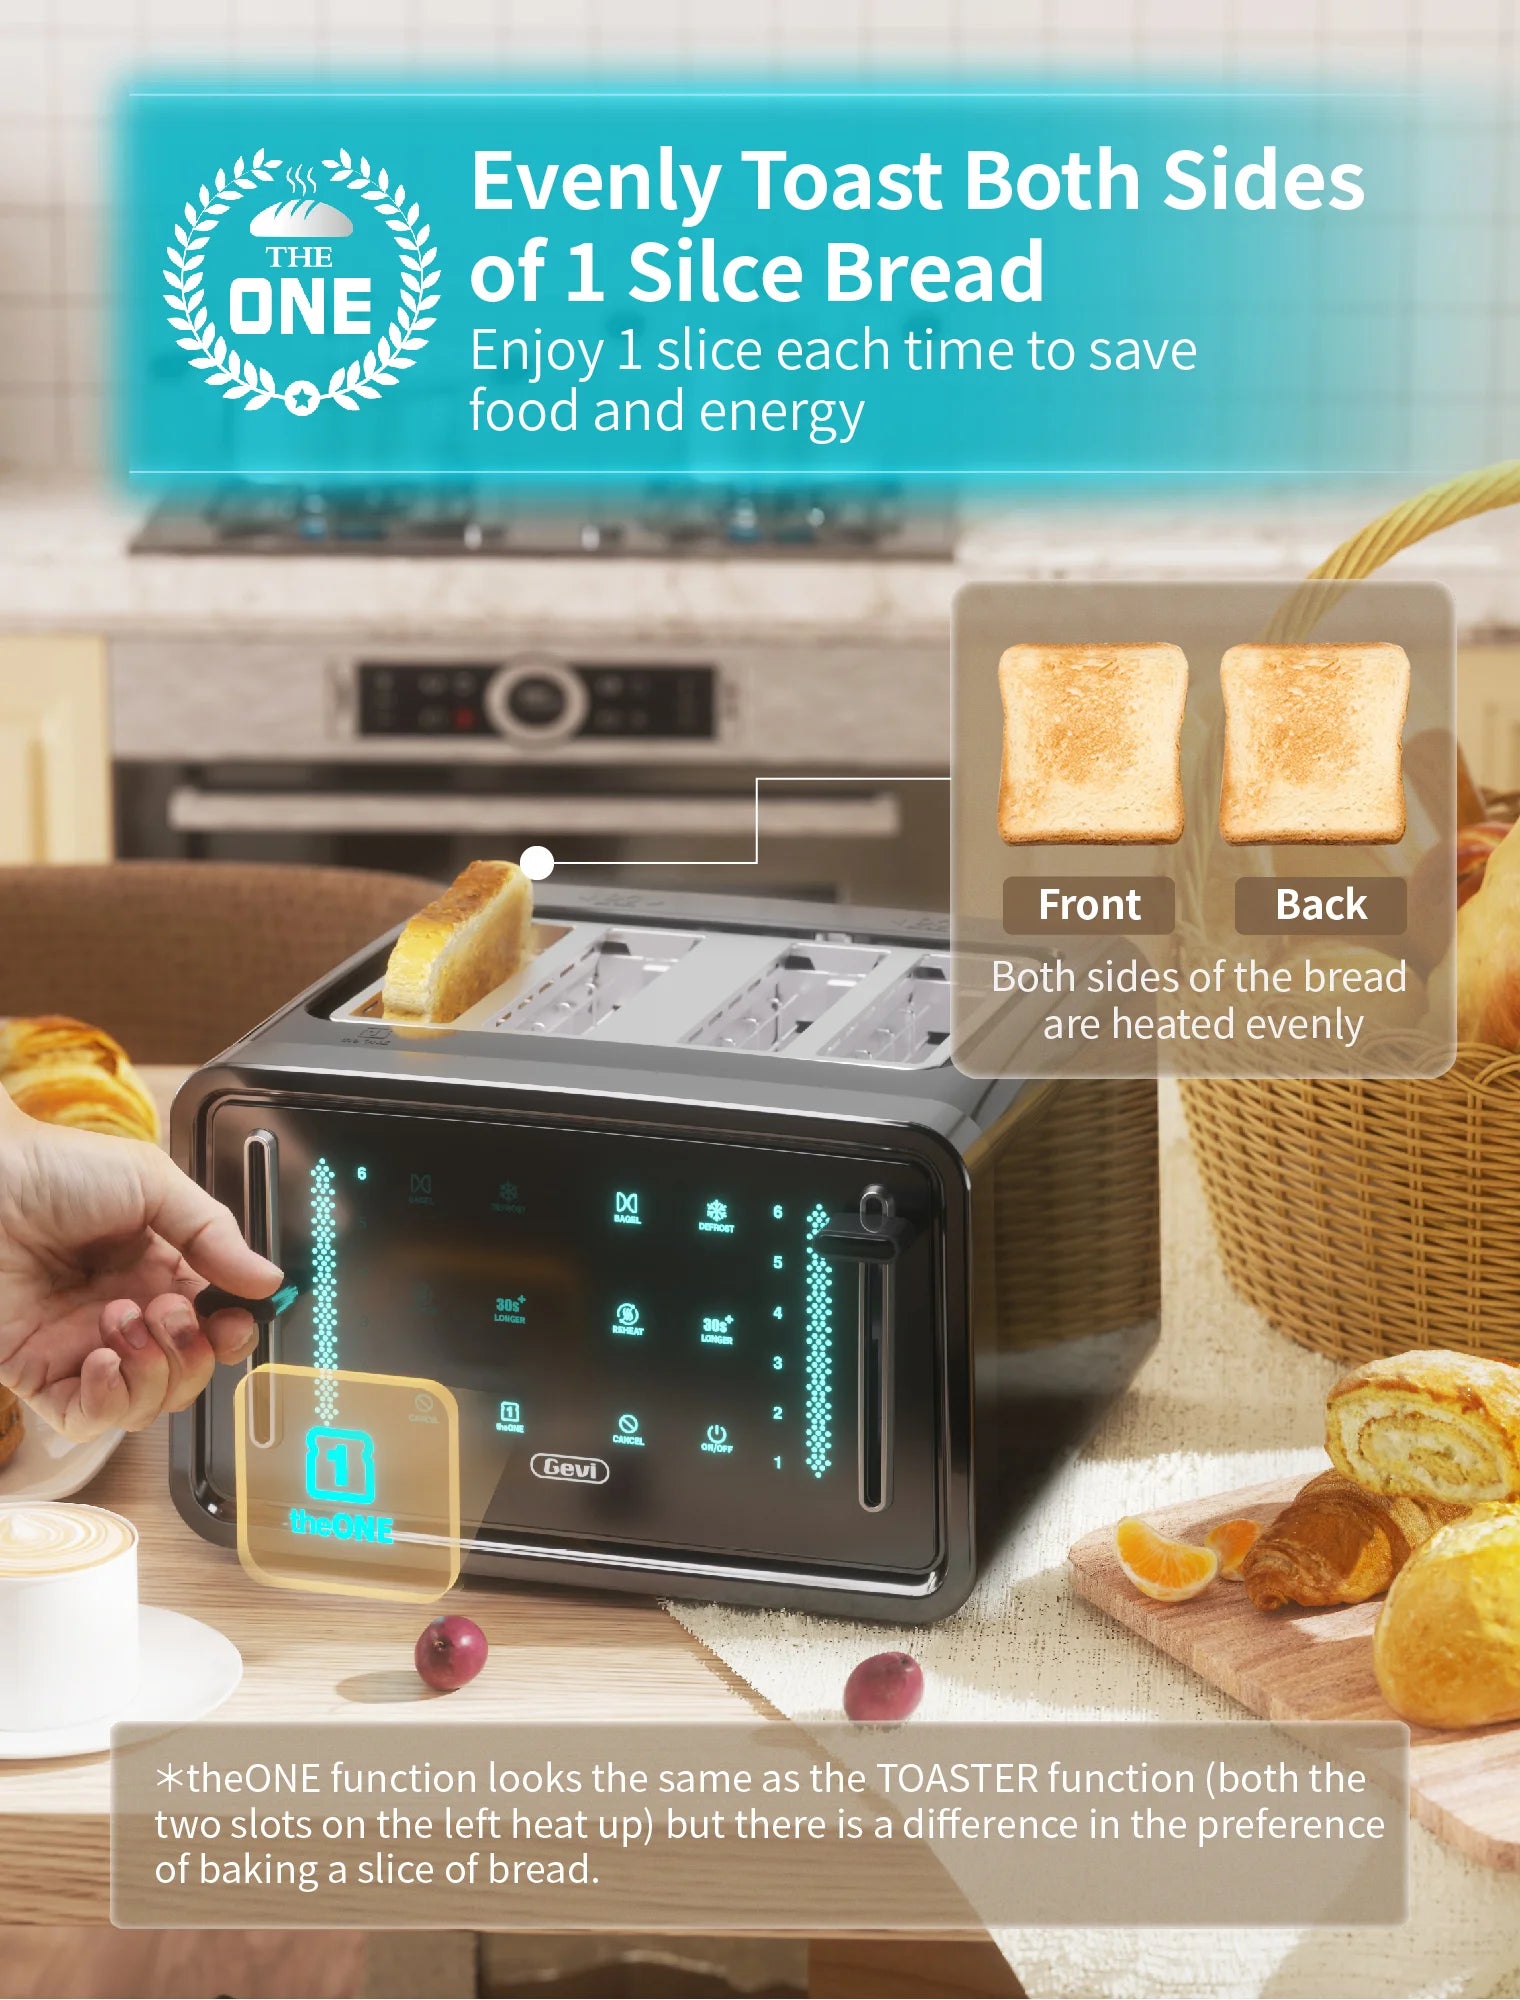 Gevi 4 Slice Toaster, LED Display, Dual Control Panels, 6 Shade